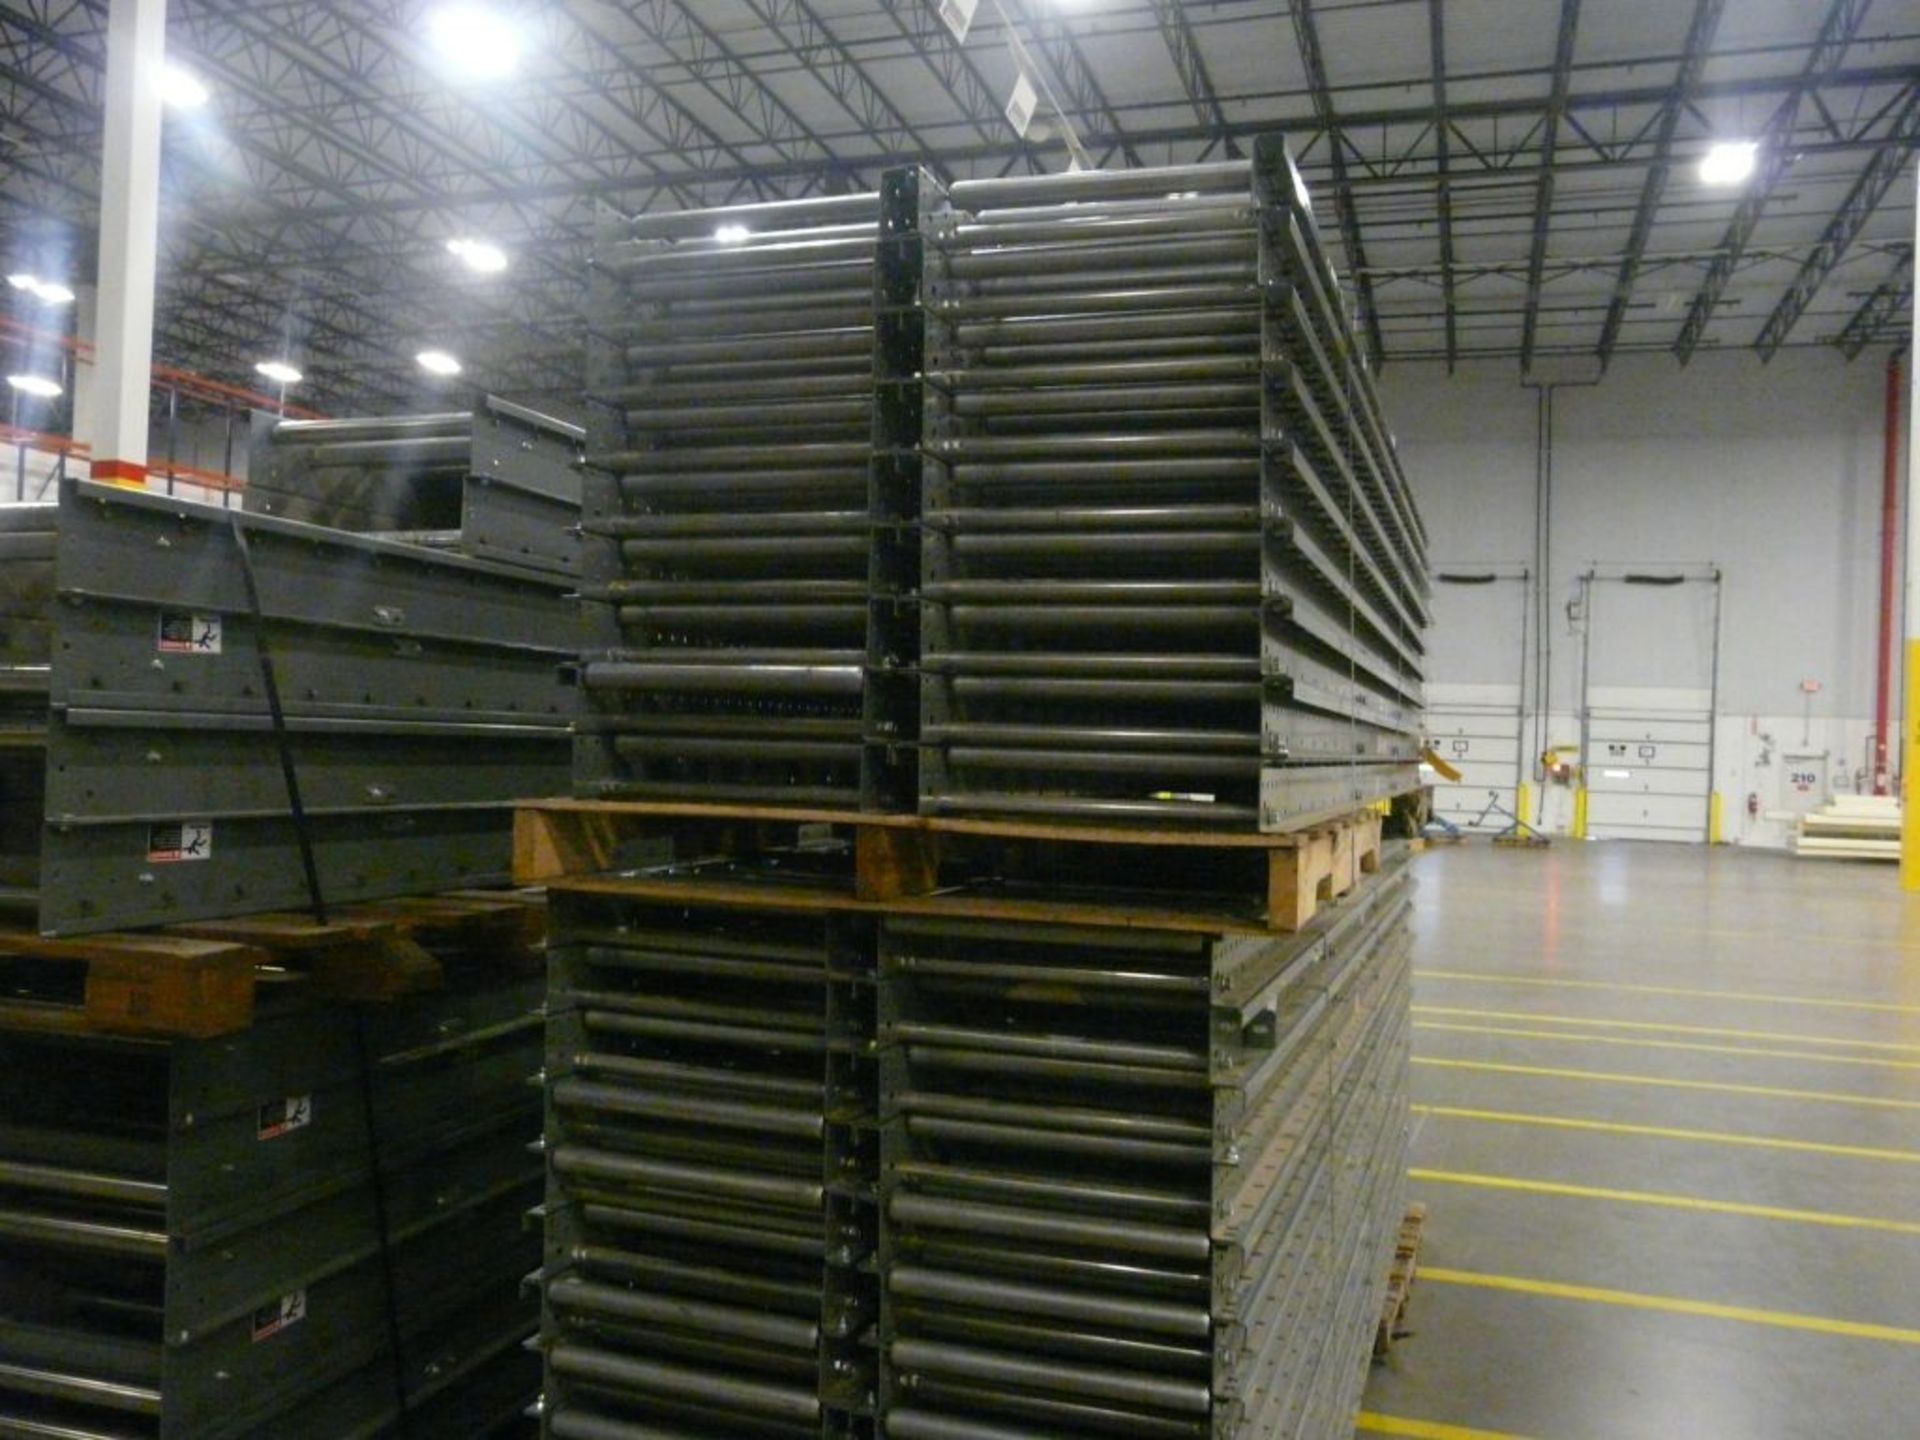 Lot of (18) 140 Belt Intermediate Conveyors - 12'L x 16"W; Tag: 223657 - $30 Lot Loading Fee - Image 2 of 3